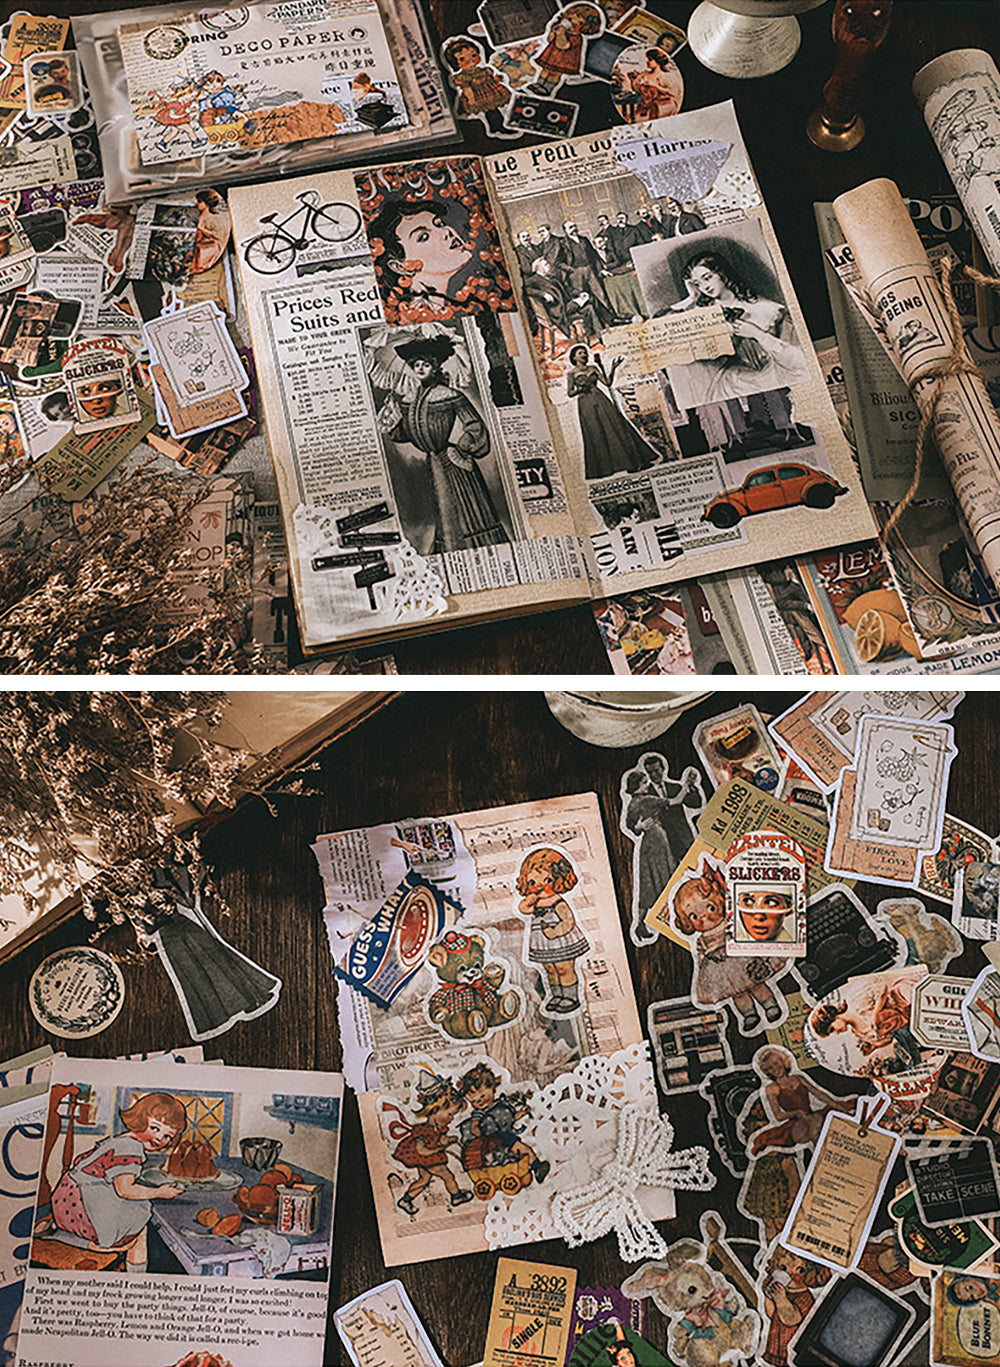 Scrapbook Supplies Pack (200 Pieces) for Art Journaling Bullet Junk Journal  Supplies Planners DIY Vintage Stickers Craft Kits Notebook Collage Album